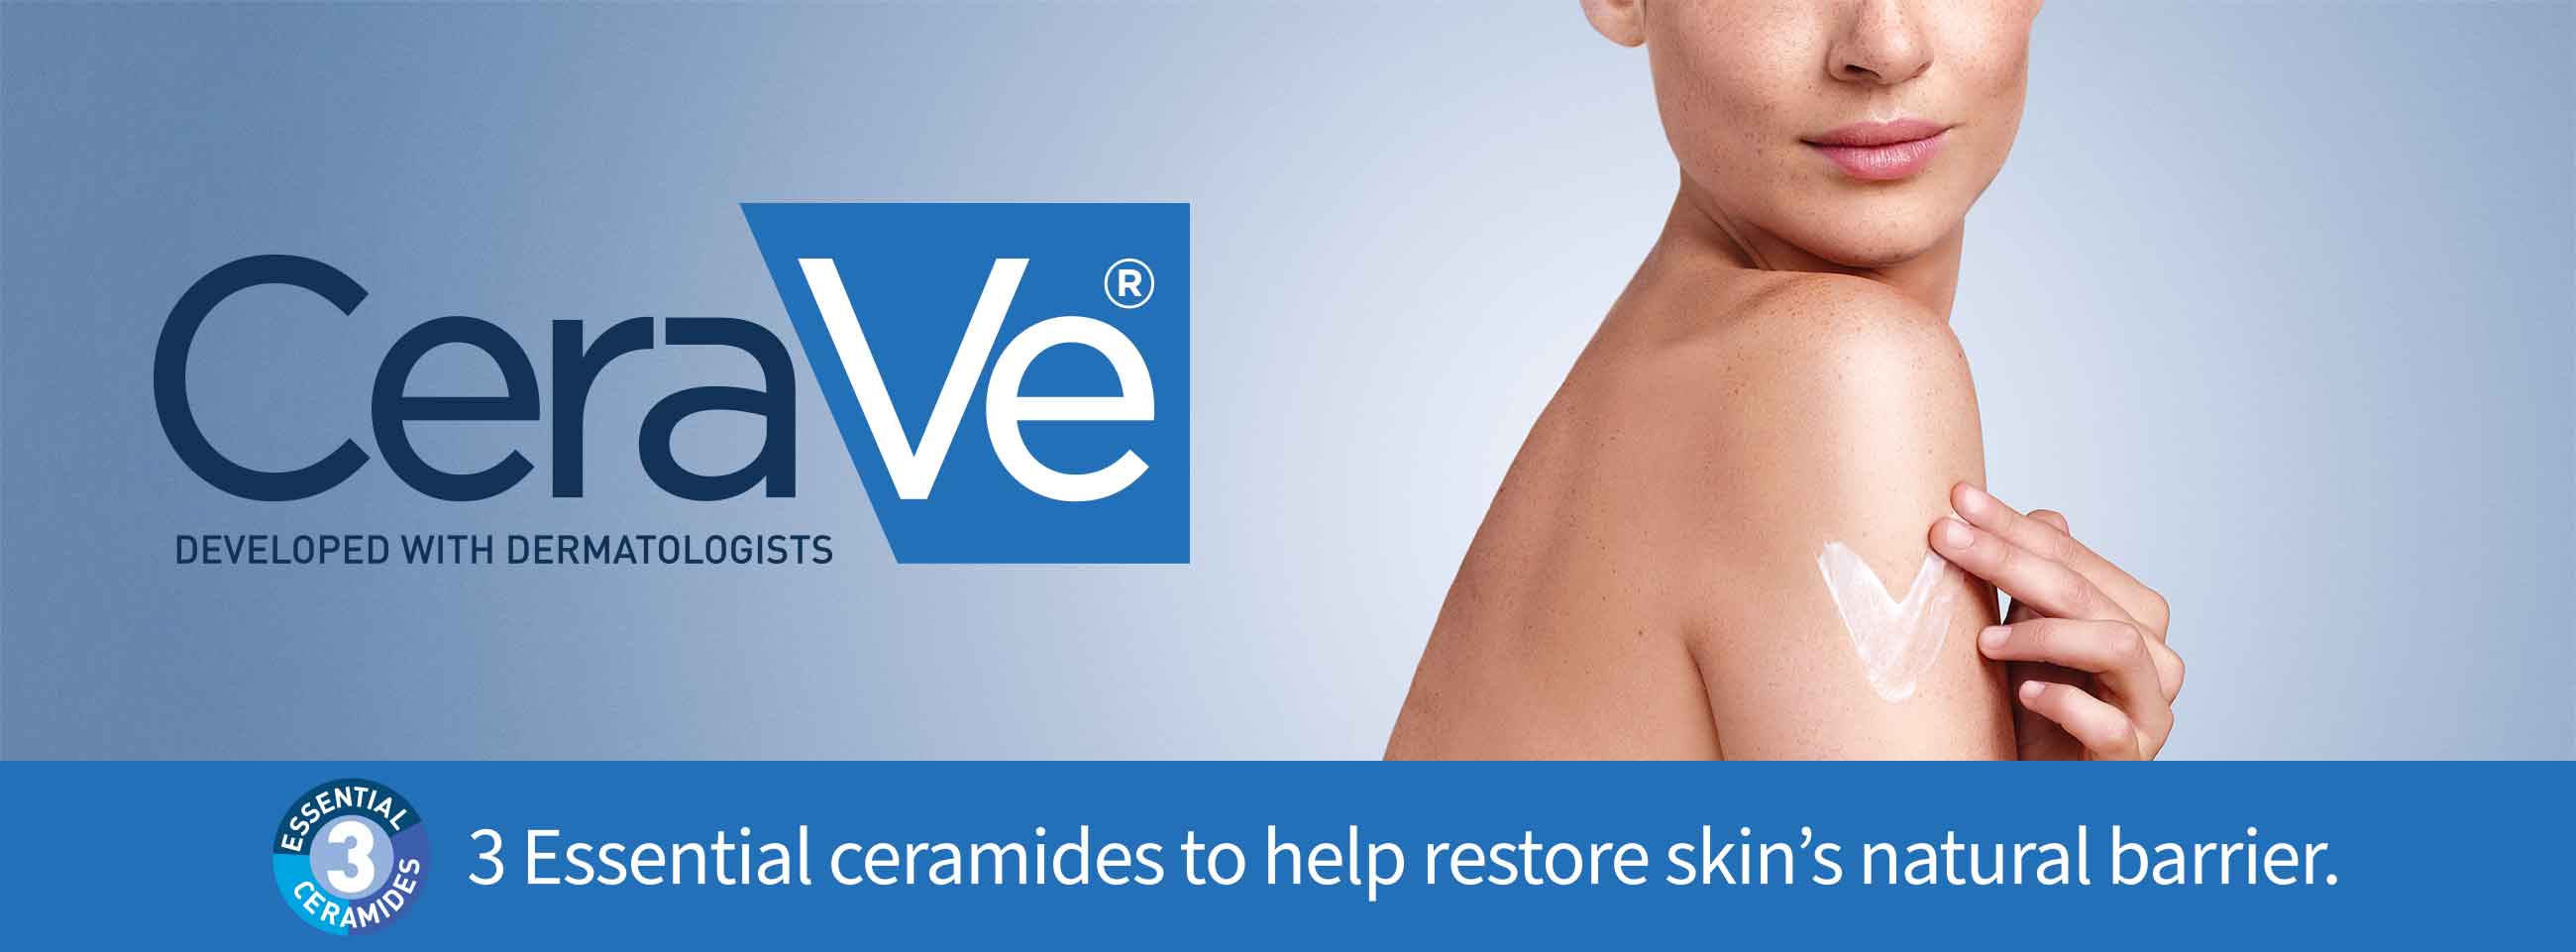 Cerave (R) Developed with Dermatologists. 3 essential ceramides to help restore skin's natural barrier.